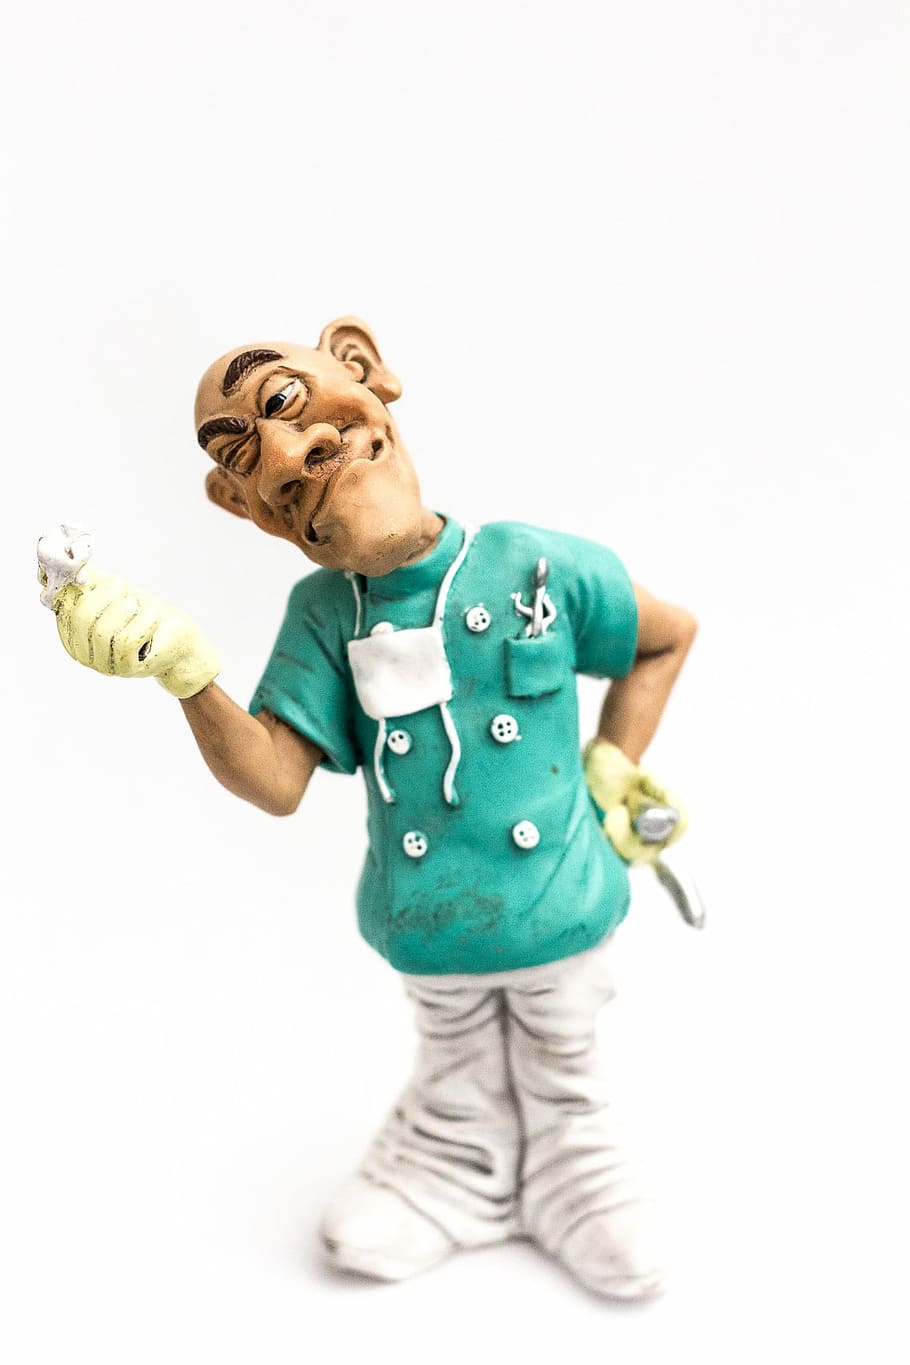 man, holding, handheld, tool figurine, Professional, Work, Dentist, doctor, hospital, studio shot